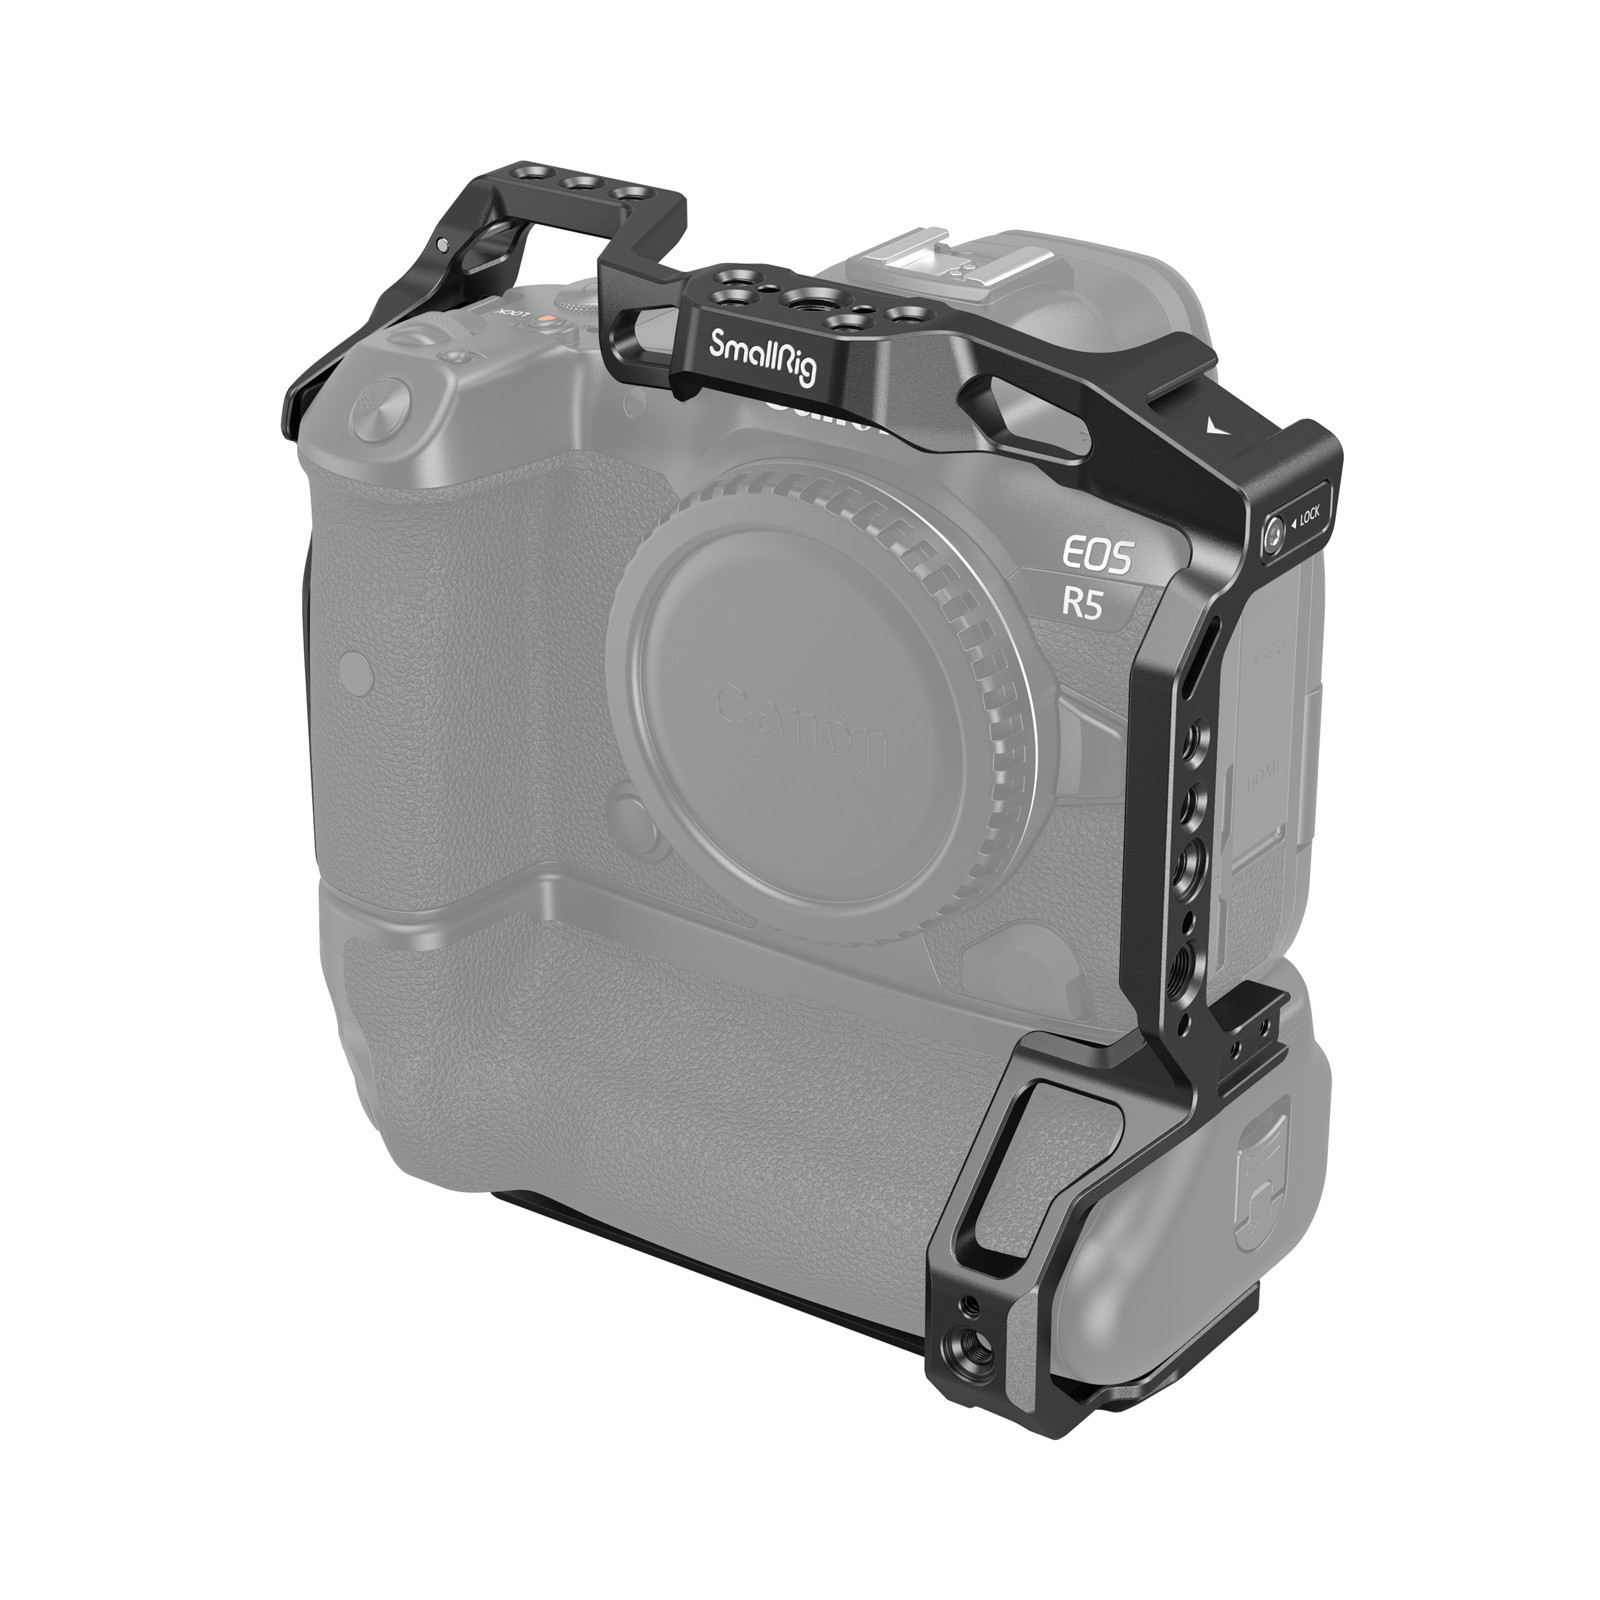 Canon EOS R6 Mark II Camera - Canon South Africa